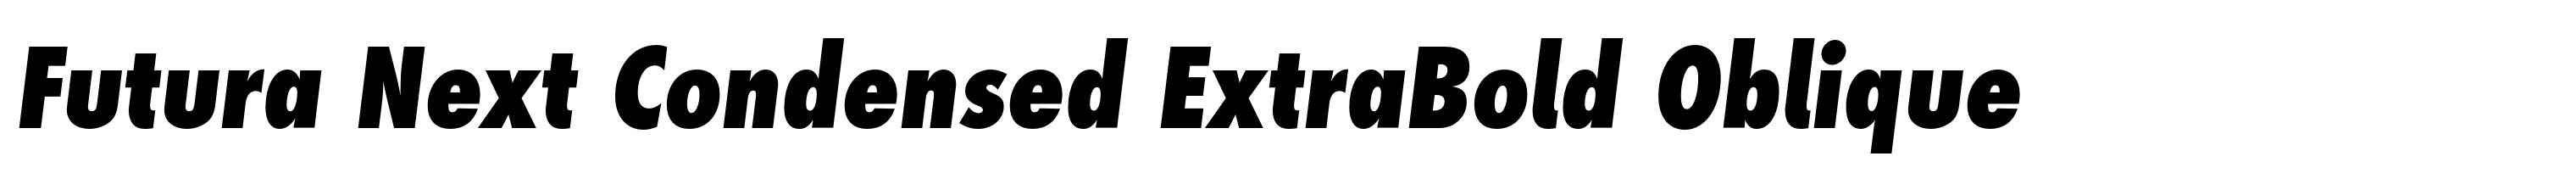 Futura Next Condensed ExtraBold Oblique